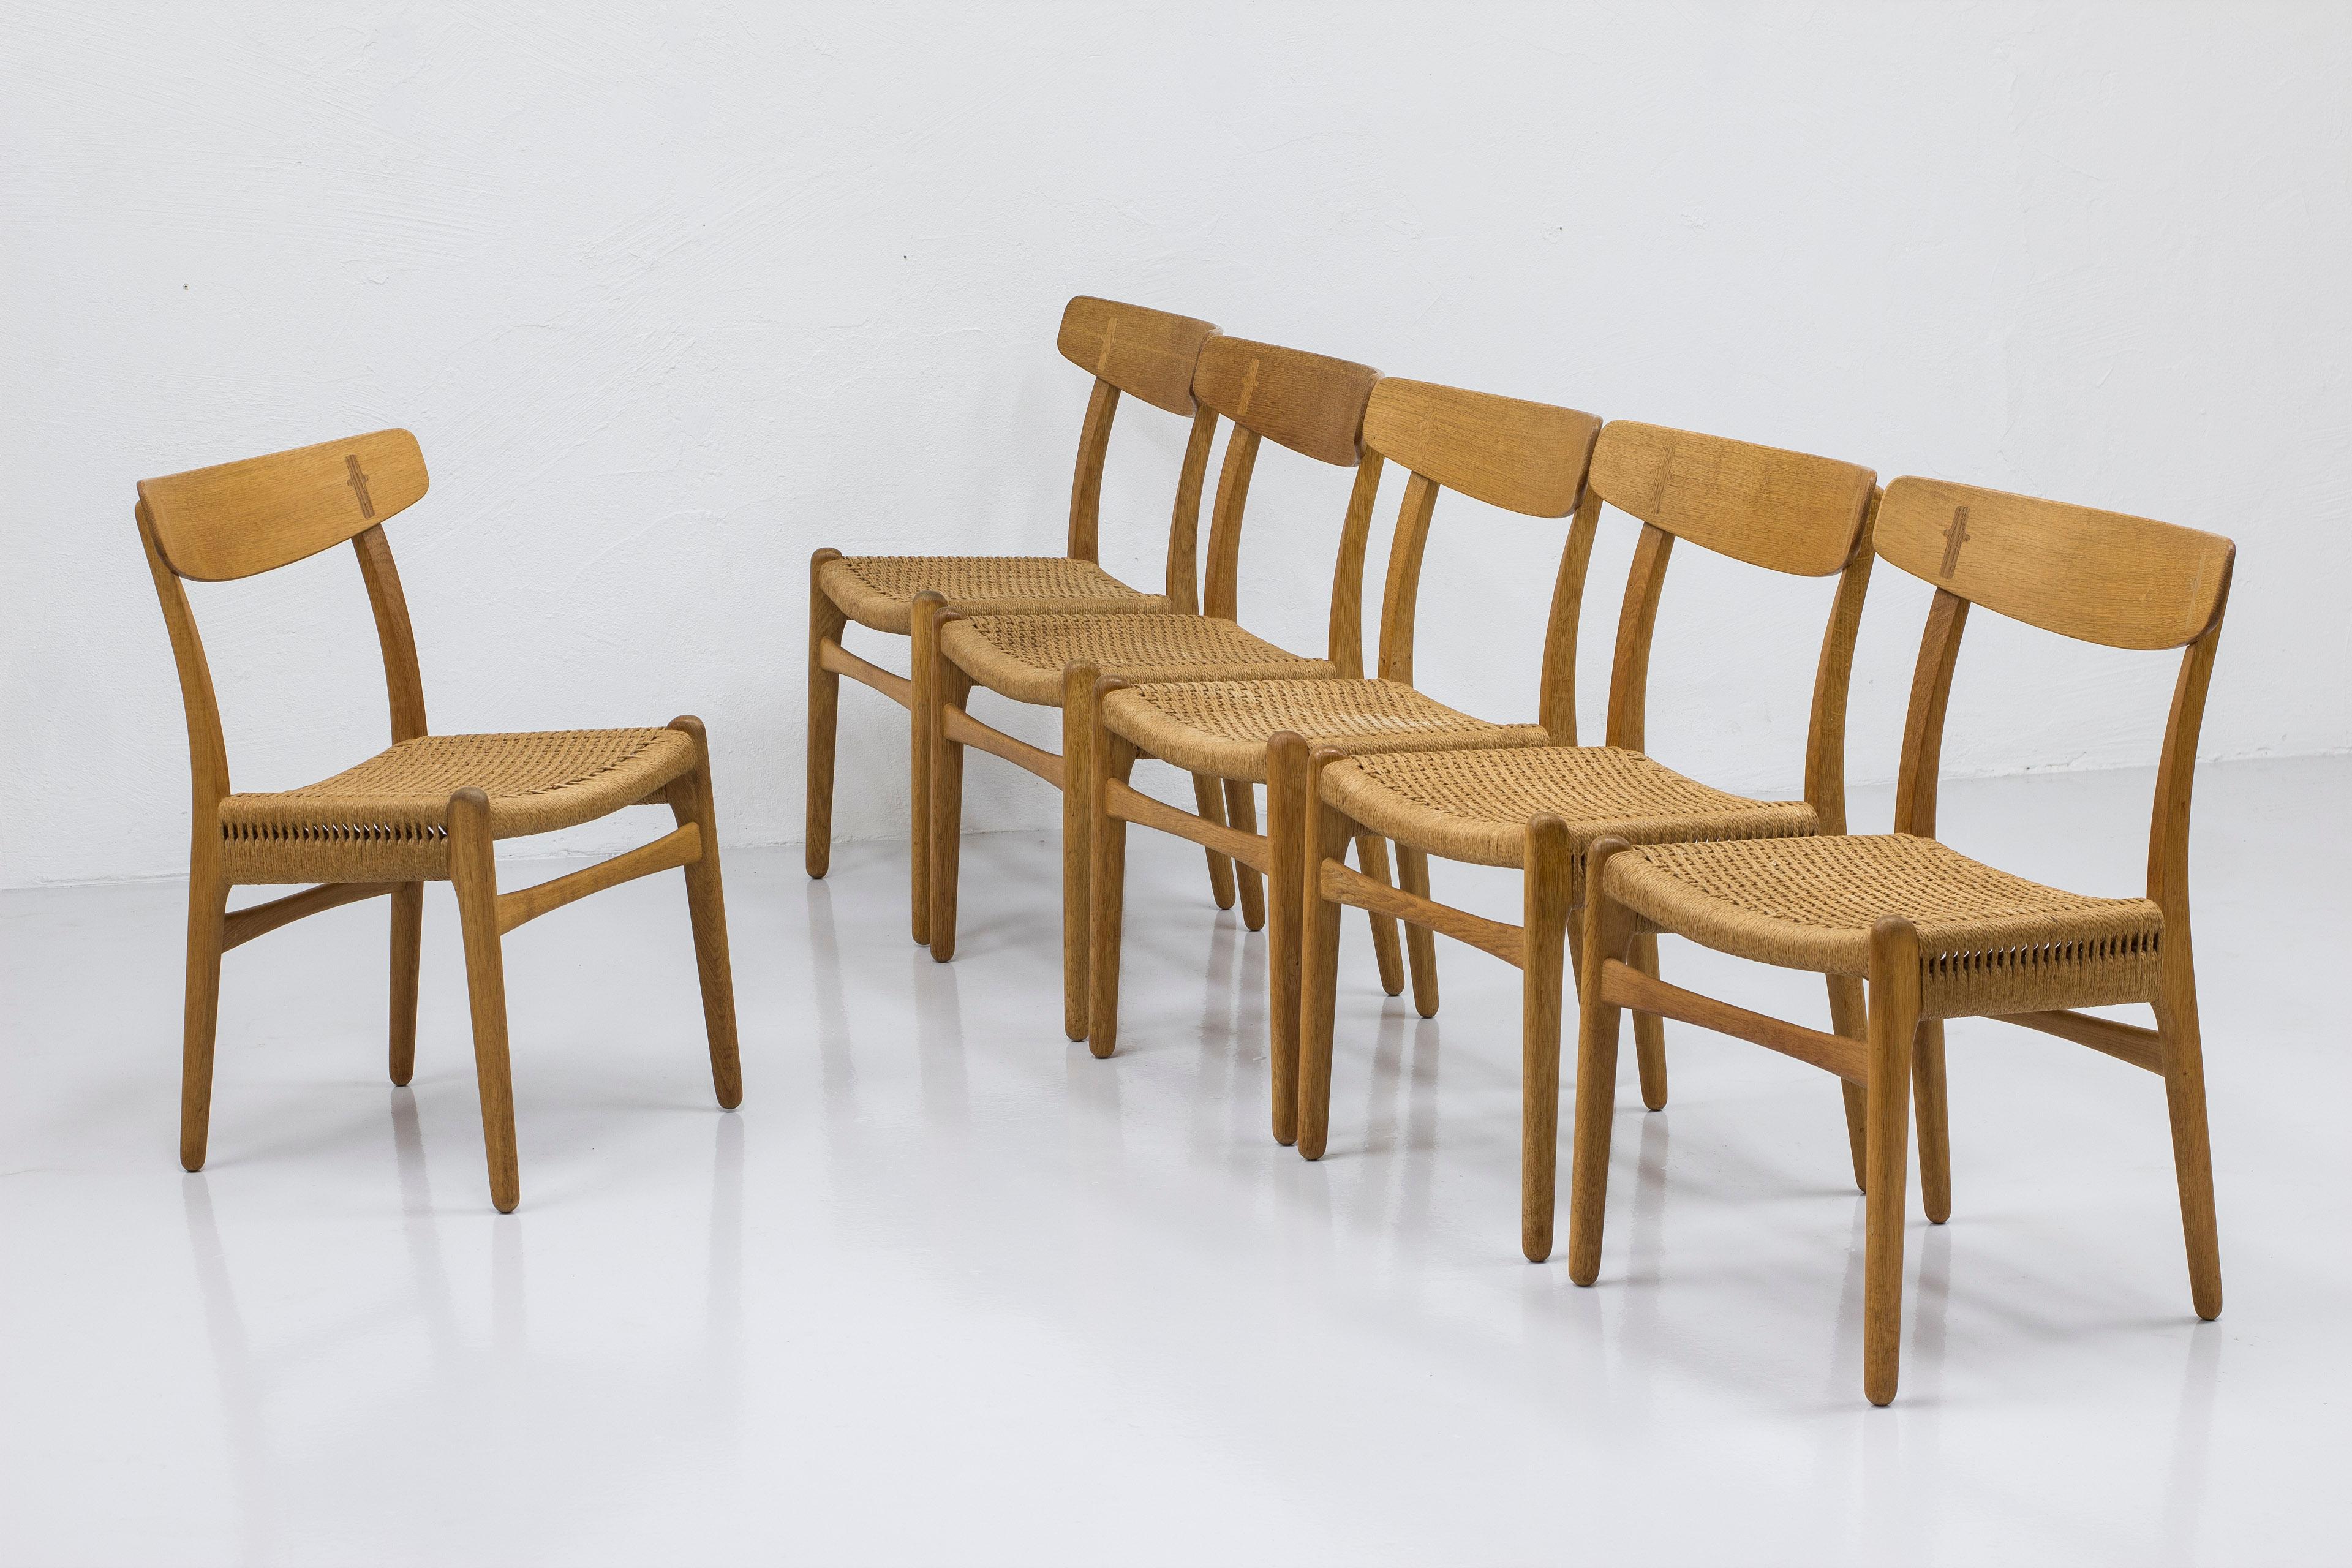 Scandinavian Modern CH23 dining chair in oak and rope by Hans J. Wegner, Carl Hansen & Søn